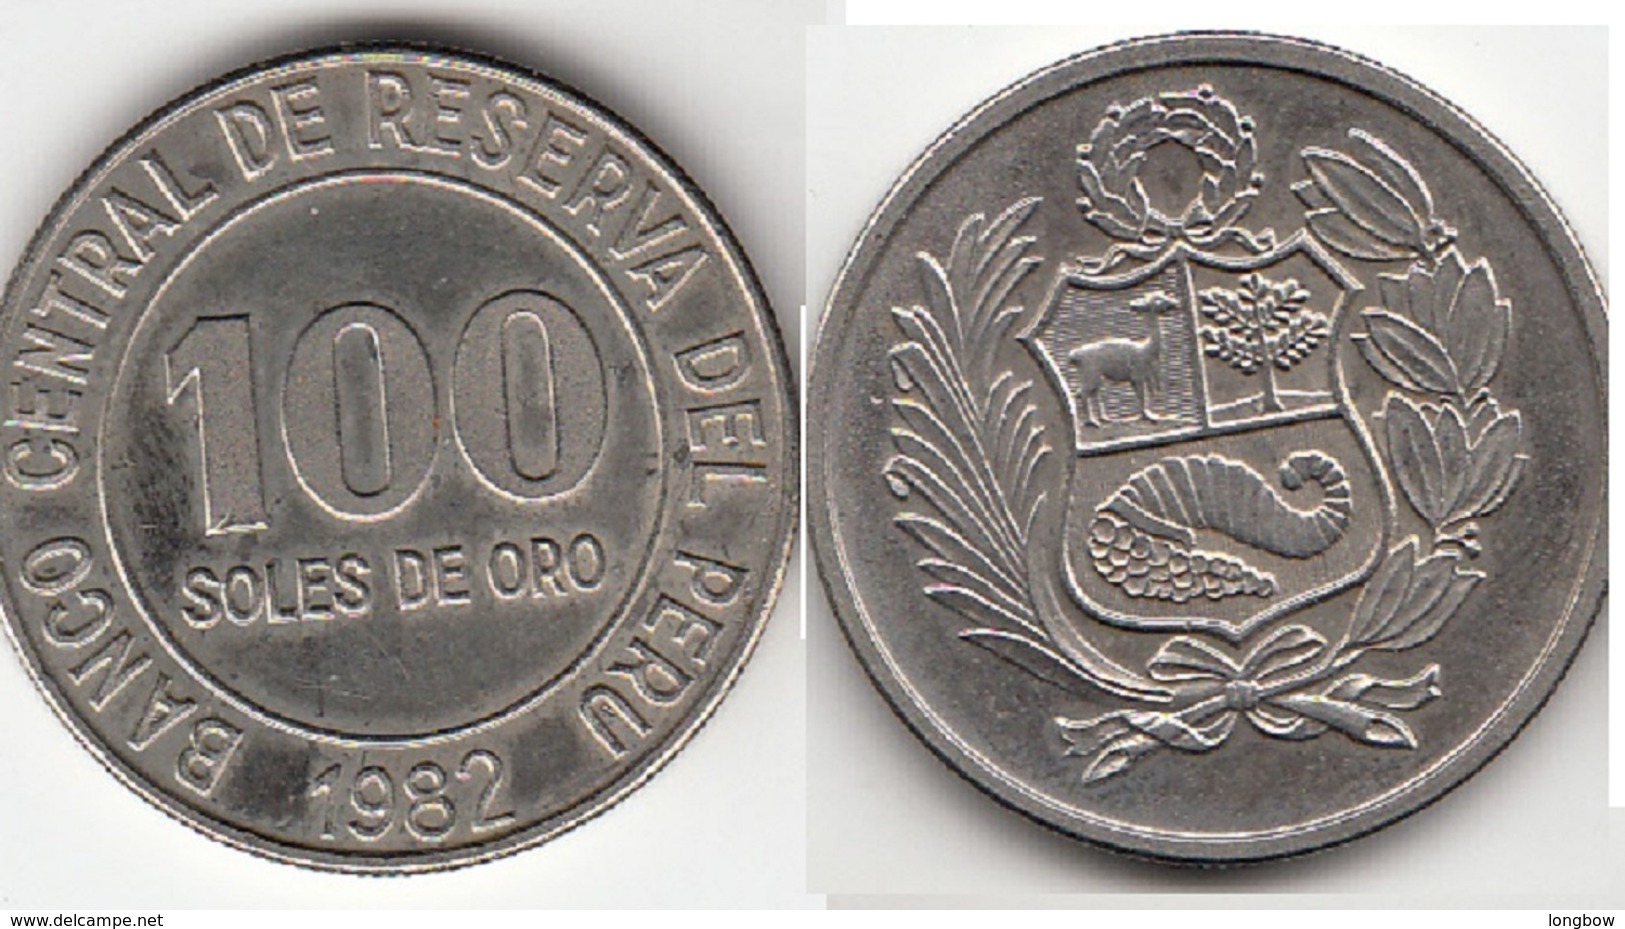 Perù 100 Soles 1982 Republic KM#283 - Used - Perú